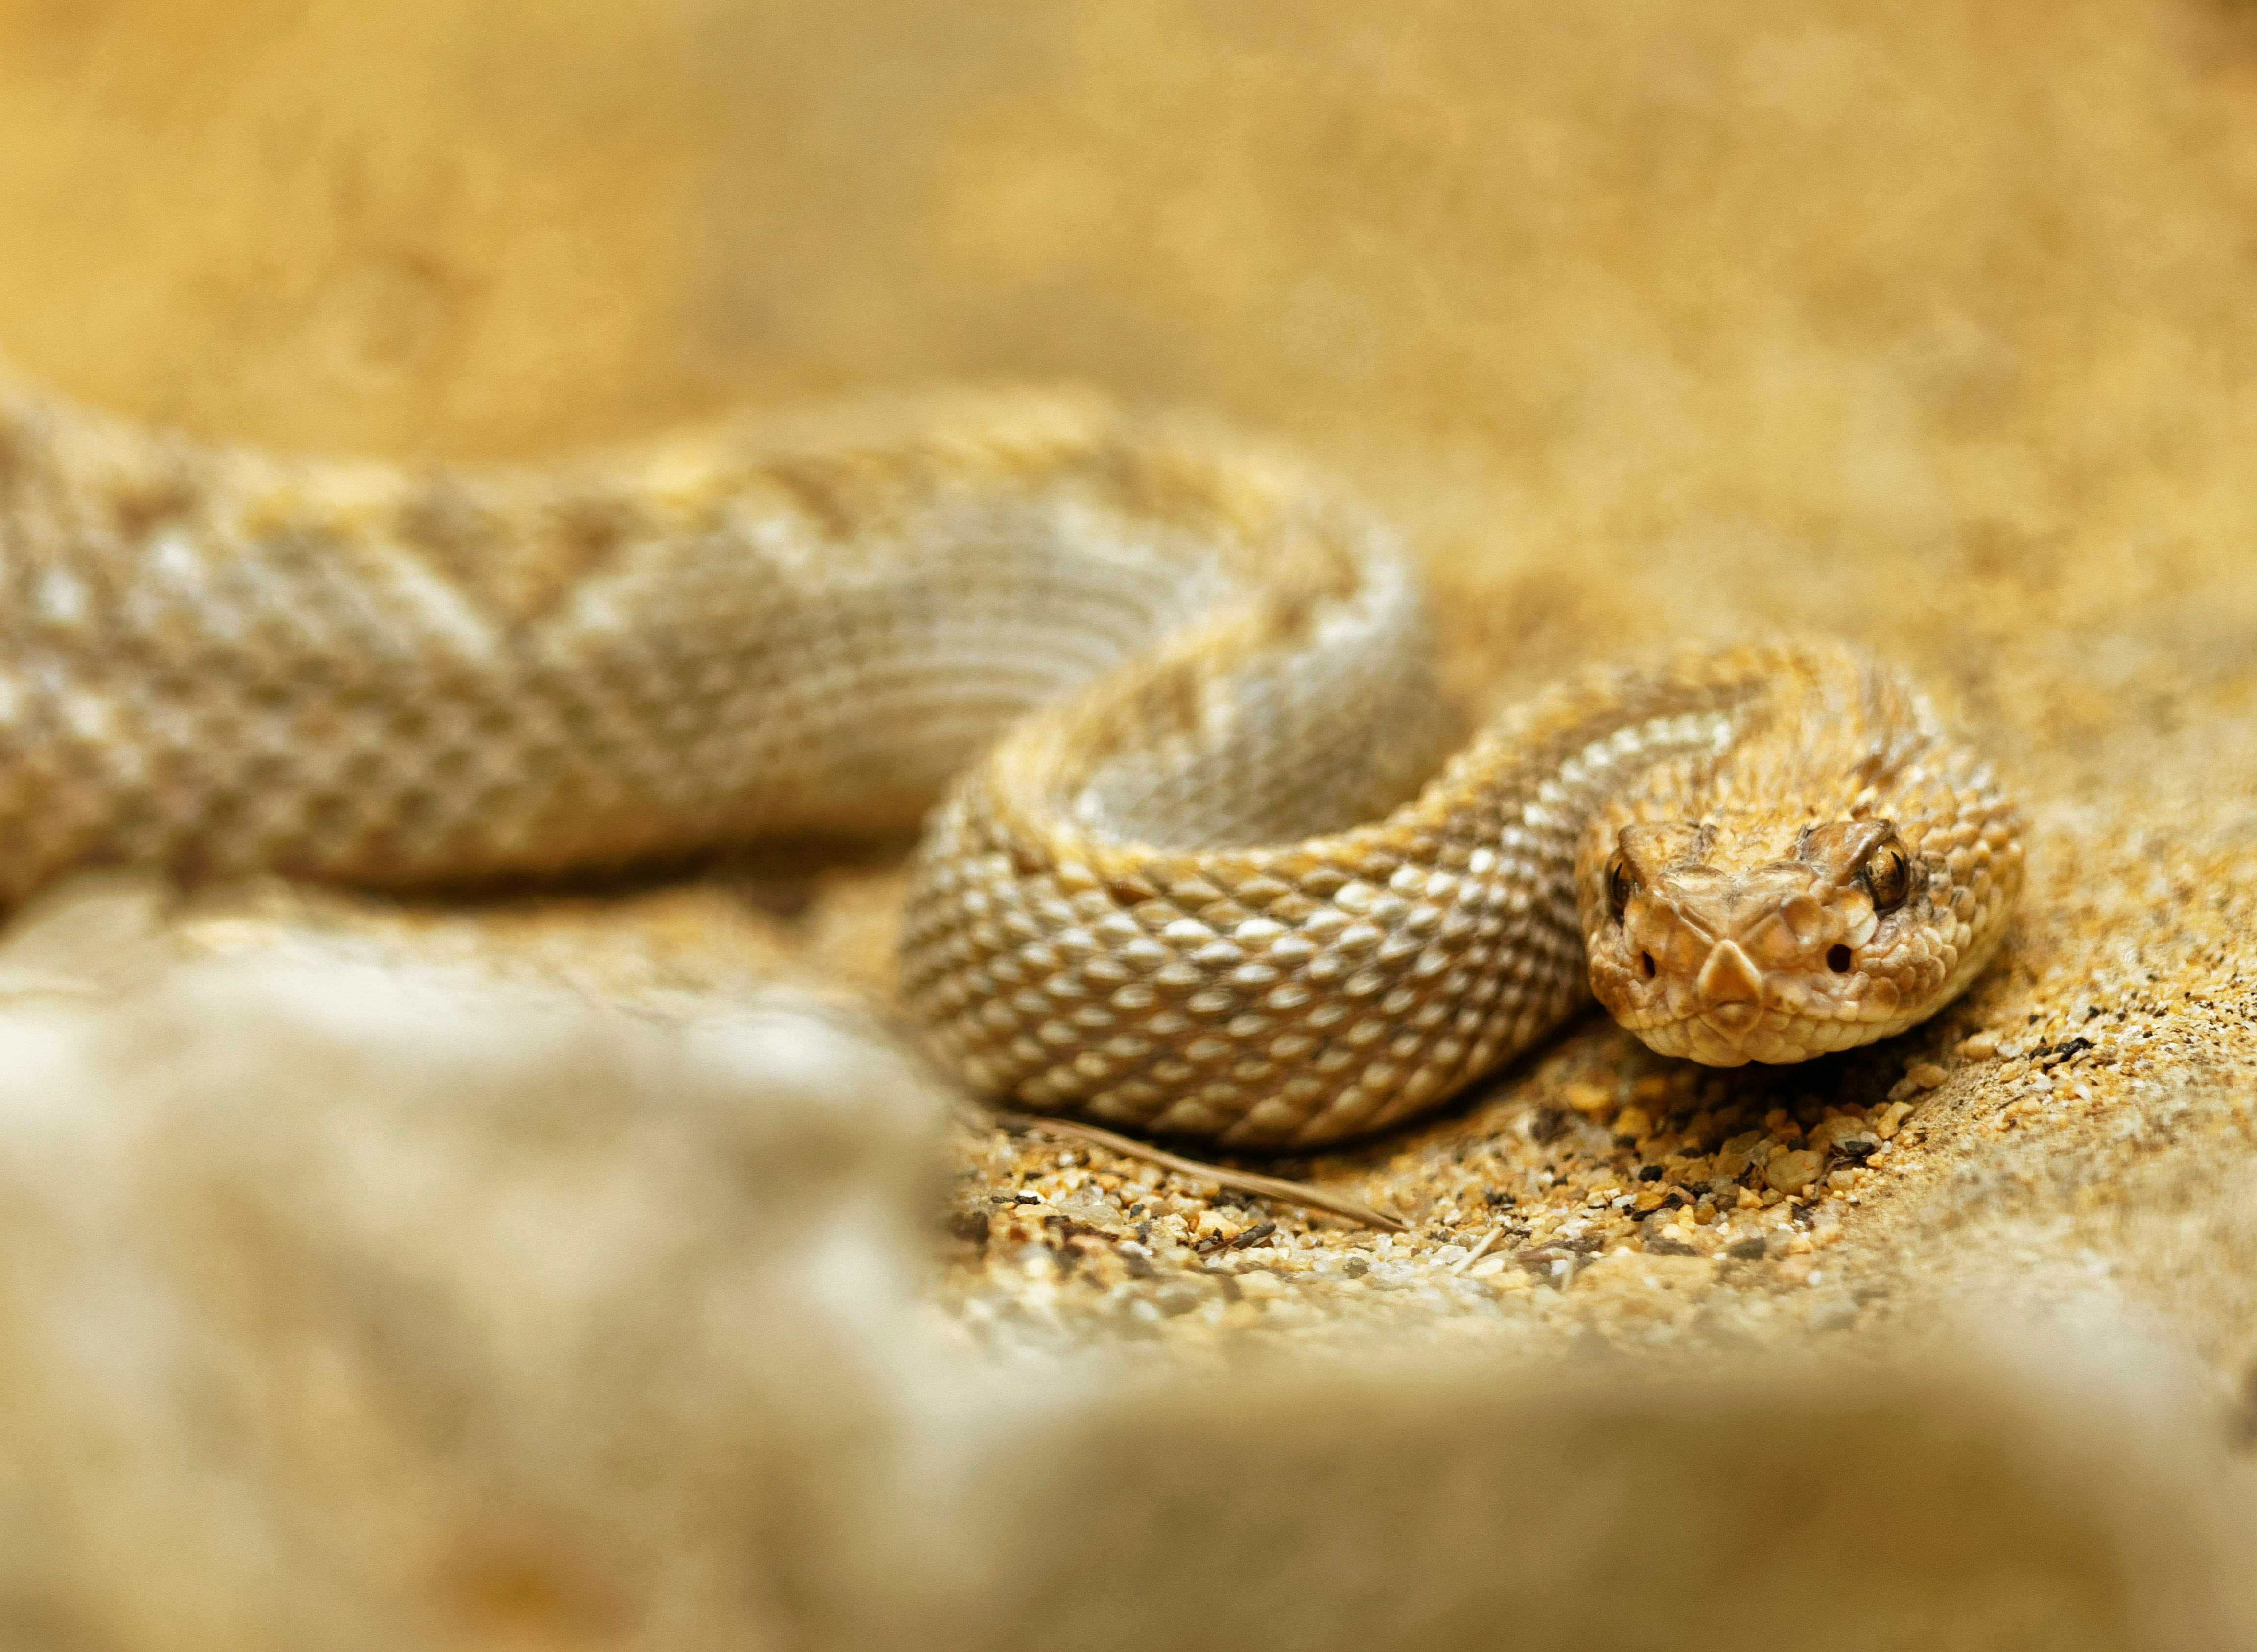 selective focus photo of rattlesnake